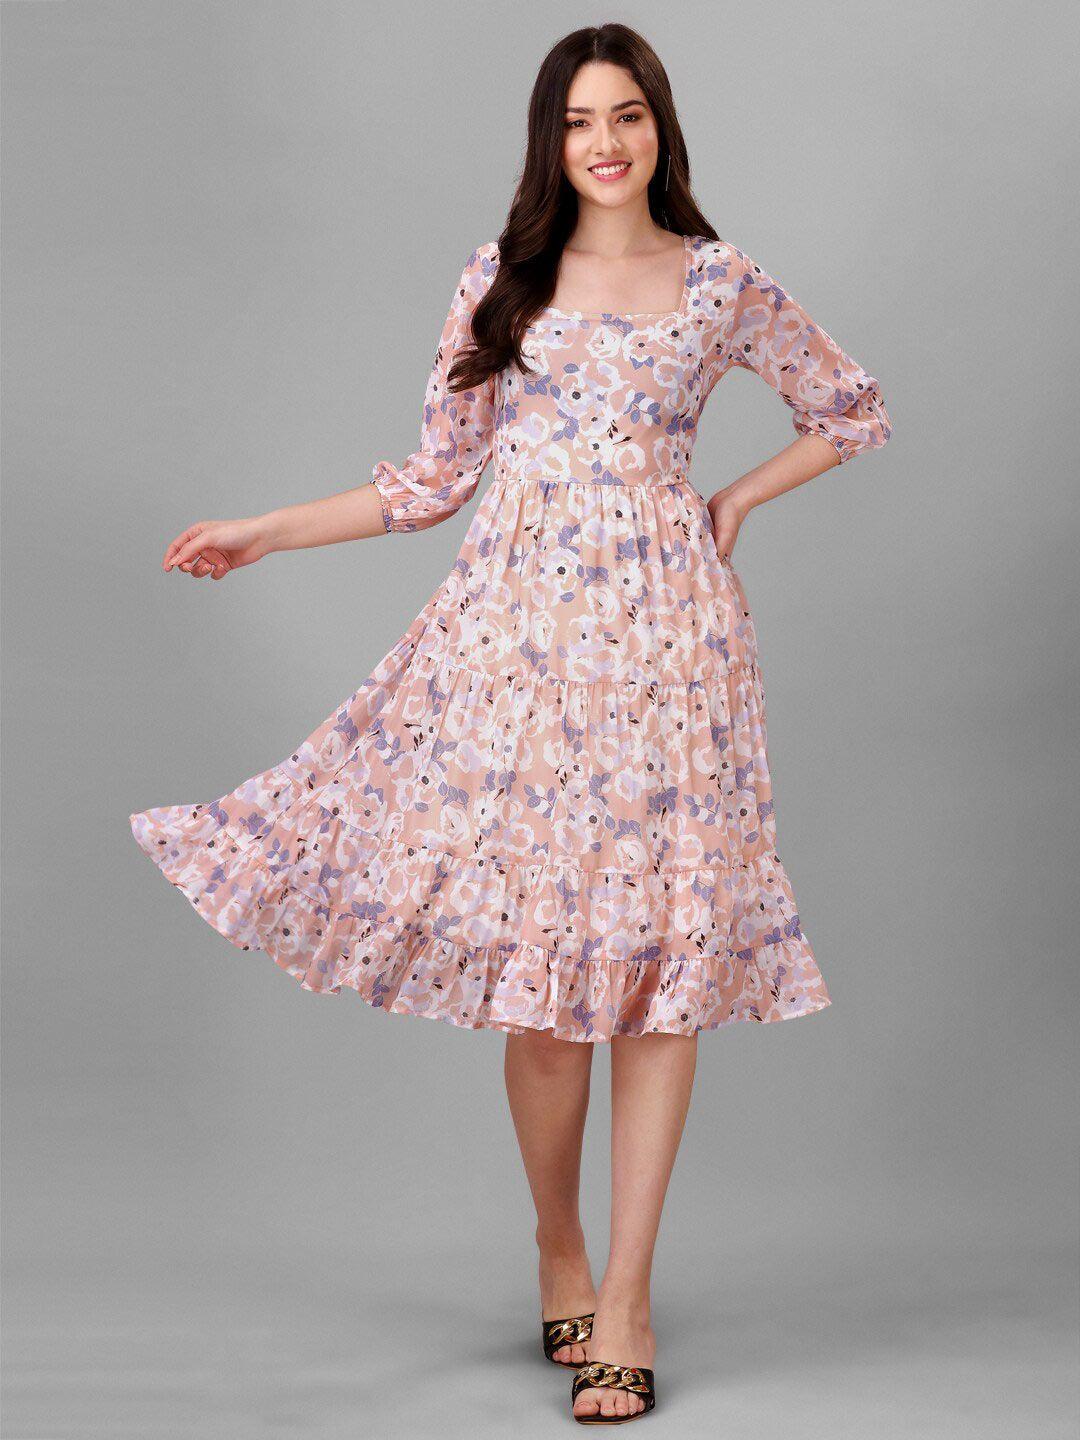 masakali-co-peach-coloured-floral-print-georgette-fit-&-flare-midi-dress